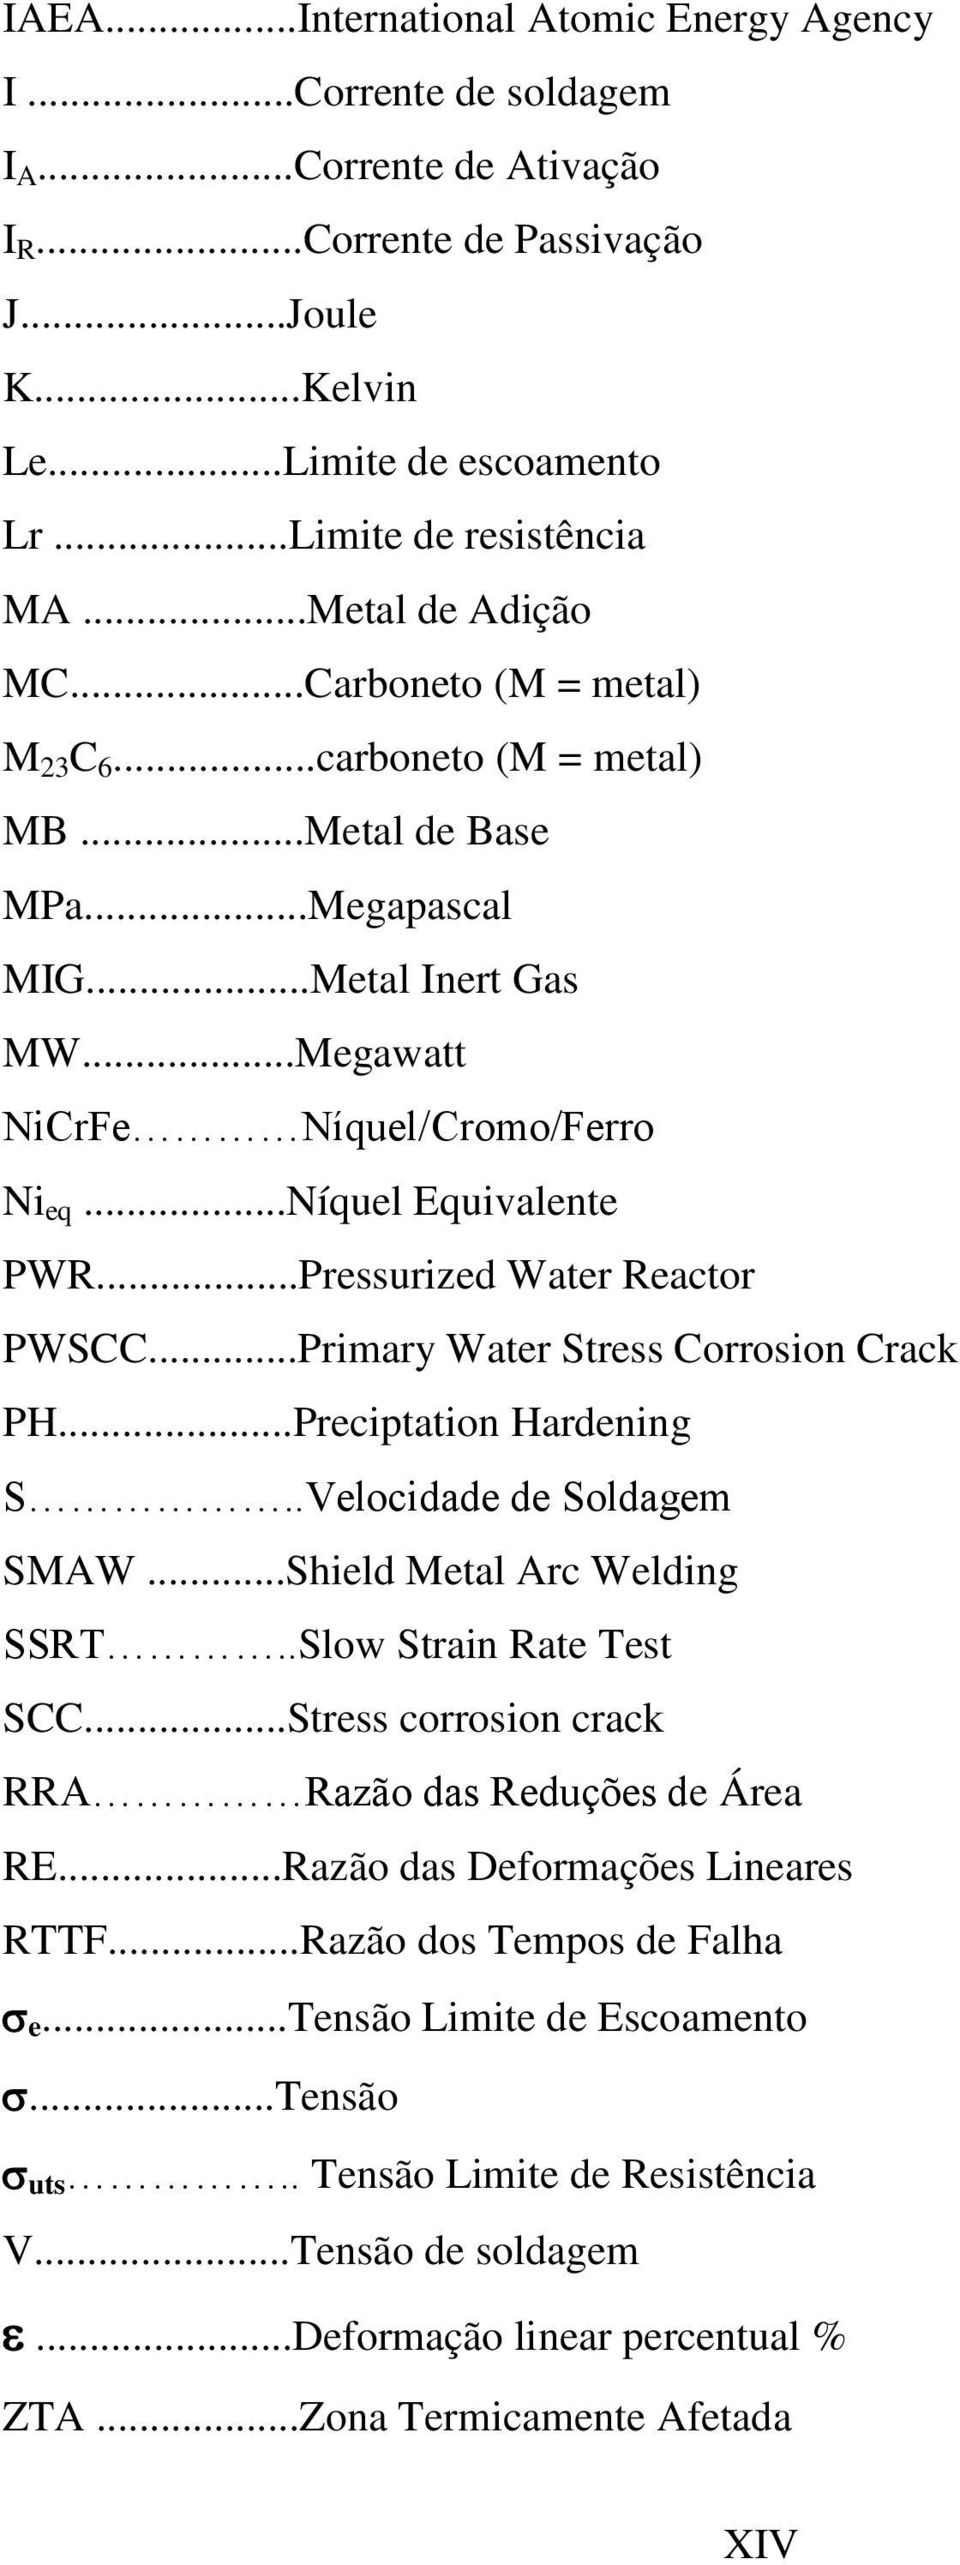 ..níquel Equivalente PWR...Pressurized Water Reactor PWSCC...Primary Water Stress Corrosion Crack PH...Preciptation Hardening S..Velocidade de Soldagem SMAW...Shield Metal Arc Welding SSRT.